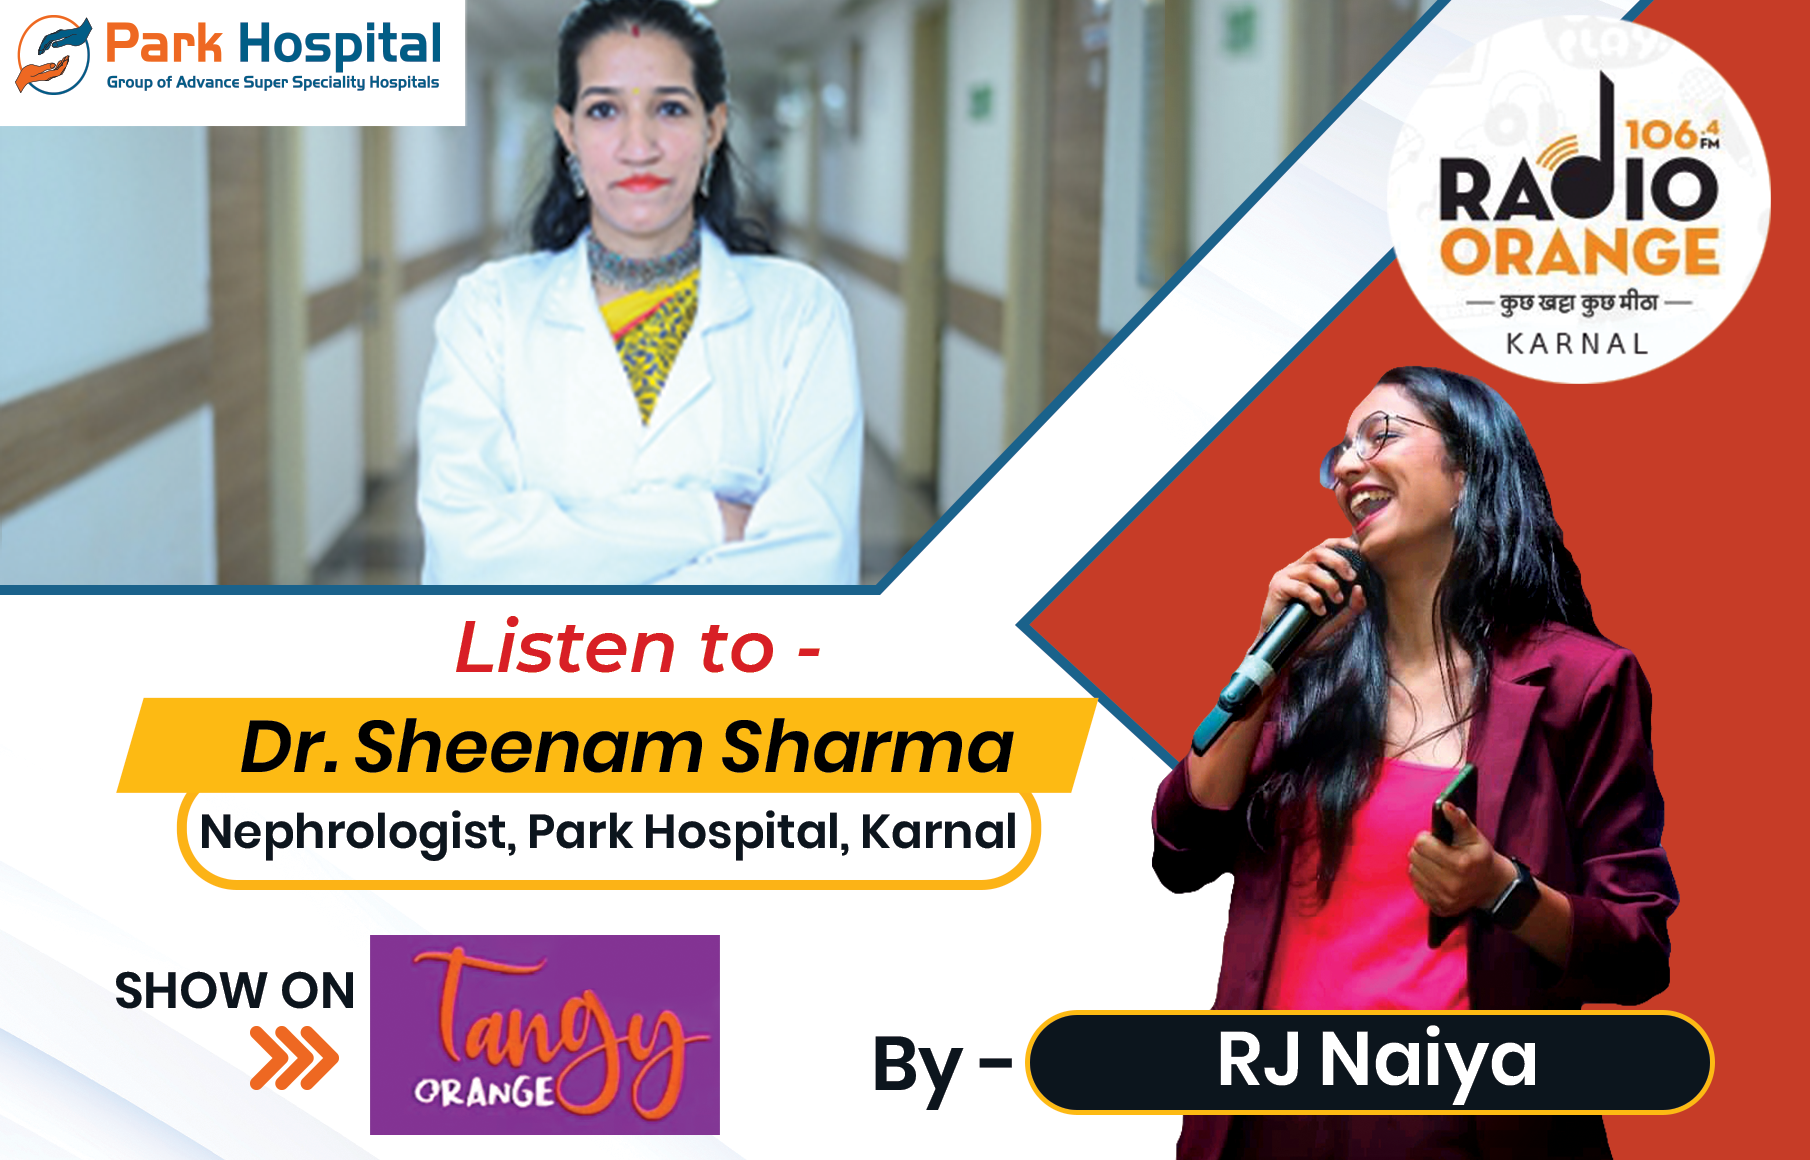 Dr. Sheenam Sharma in conversation with RJ Navya | Park Hospital | Radio Orange